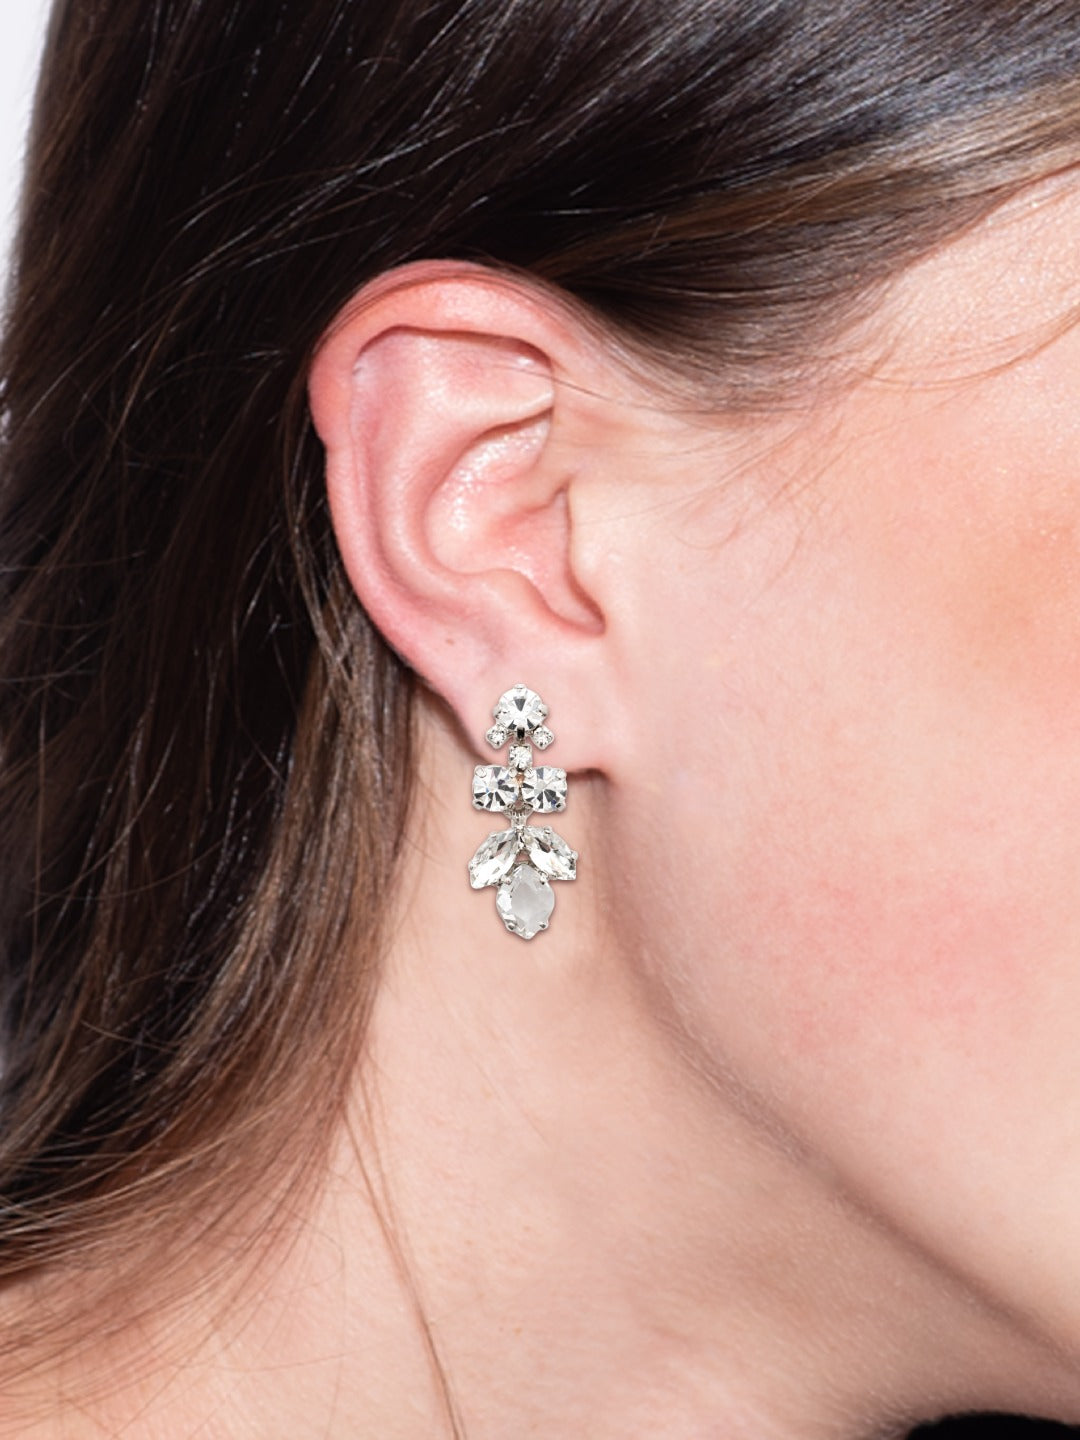 Kiss Valentines Earrings with choice of Swarovski Birthstone